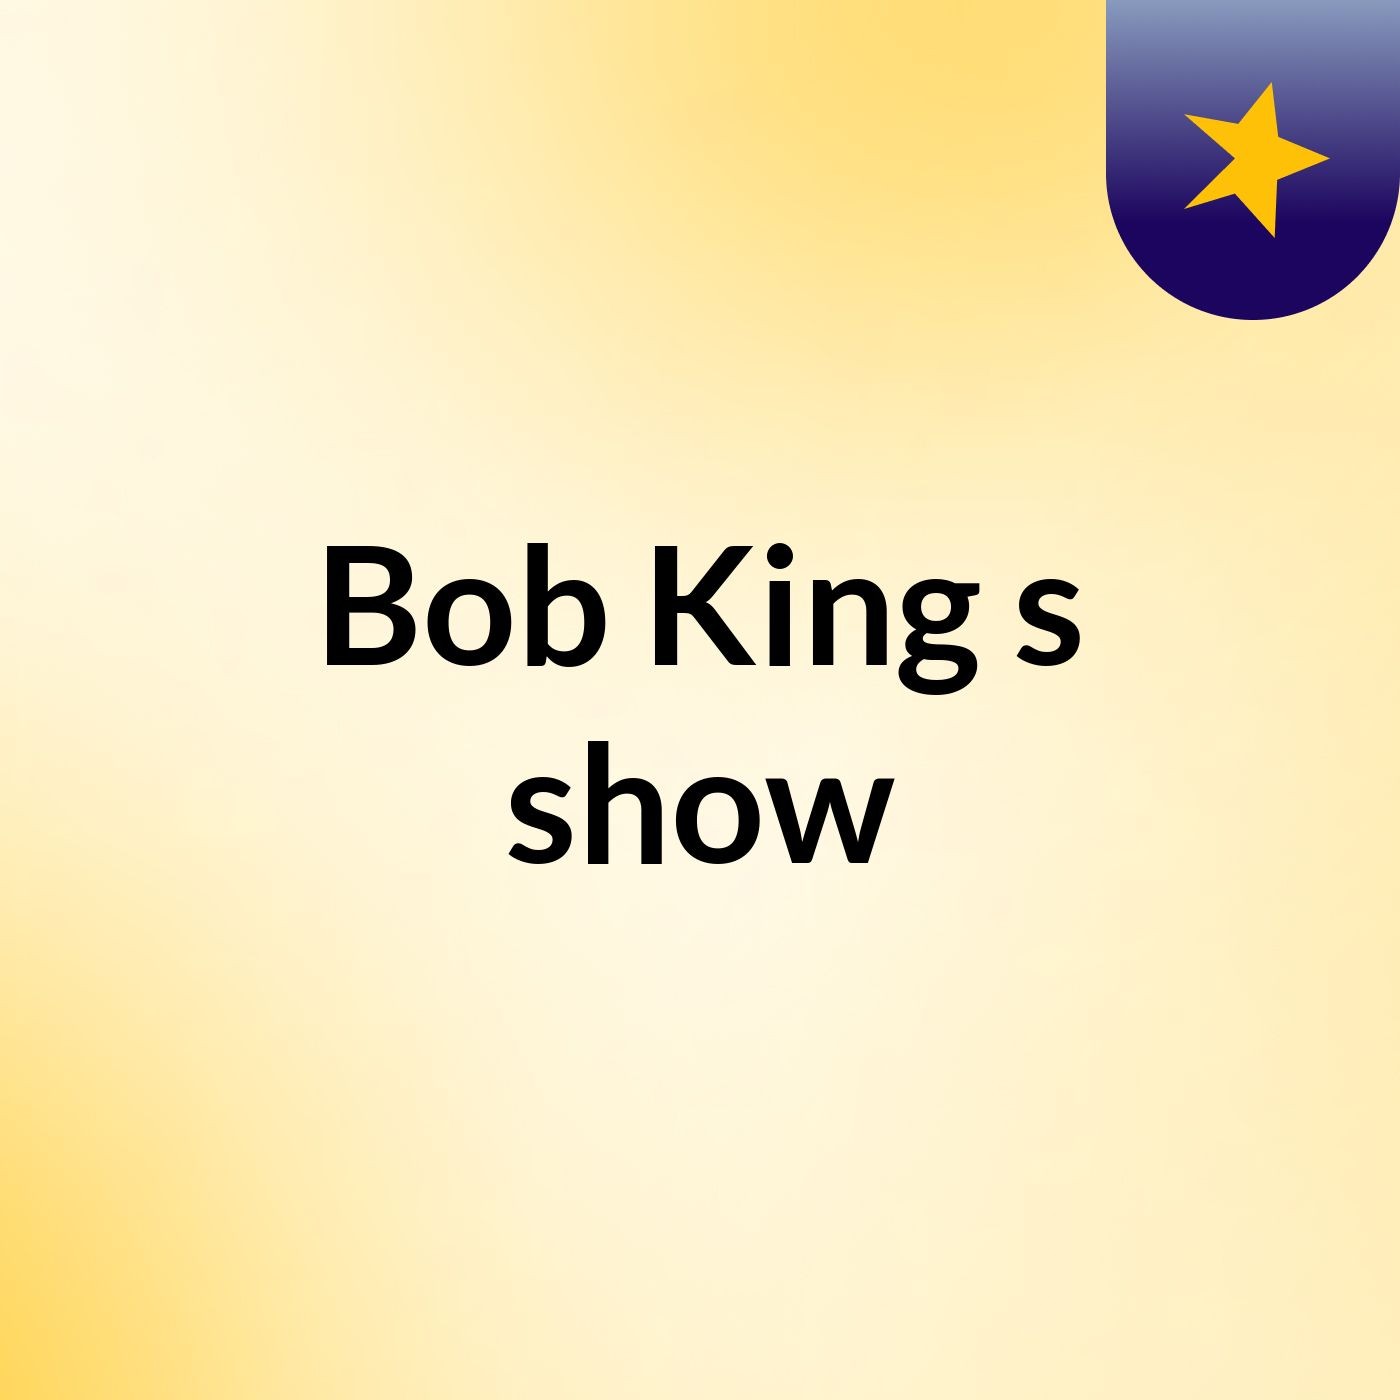 Bob King's show